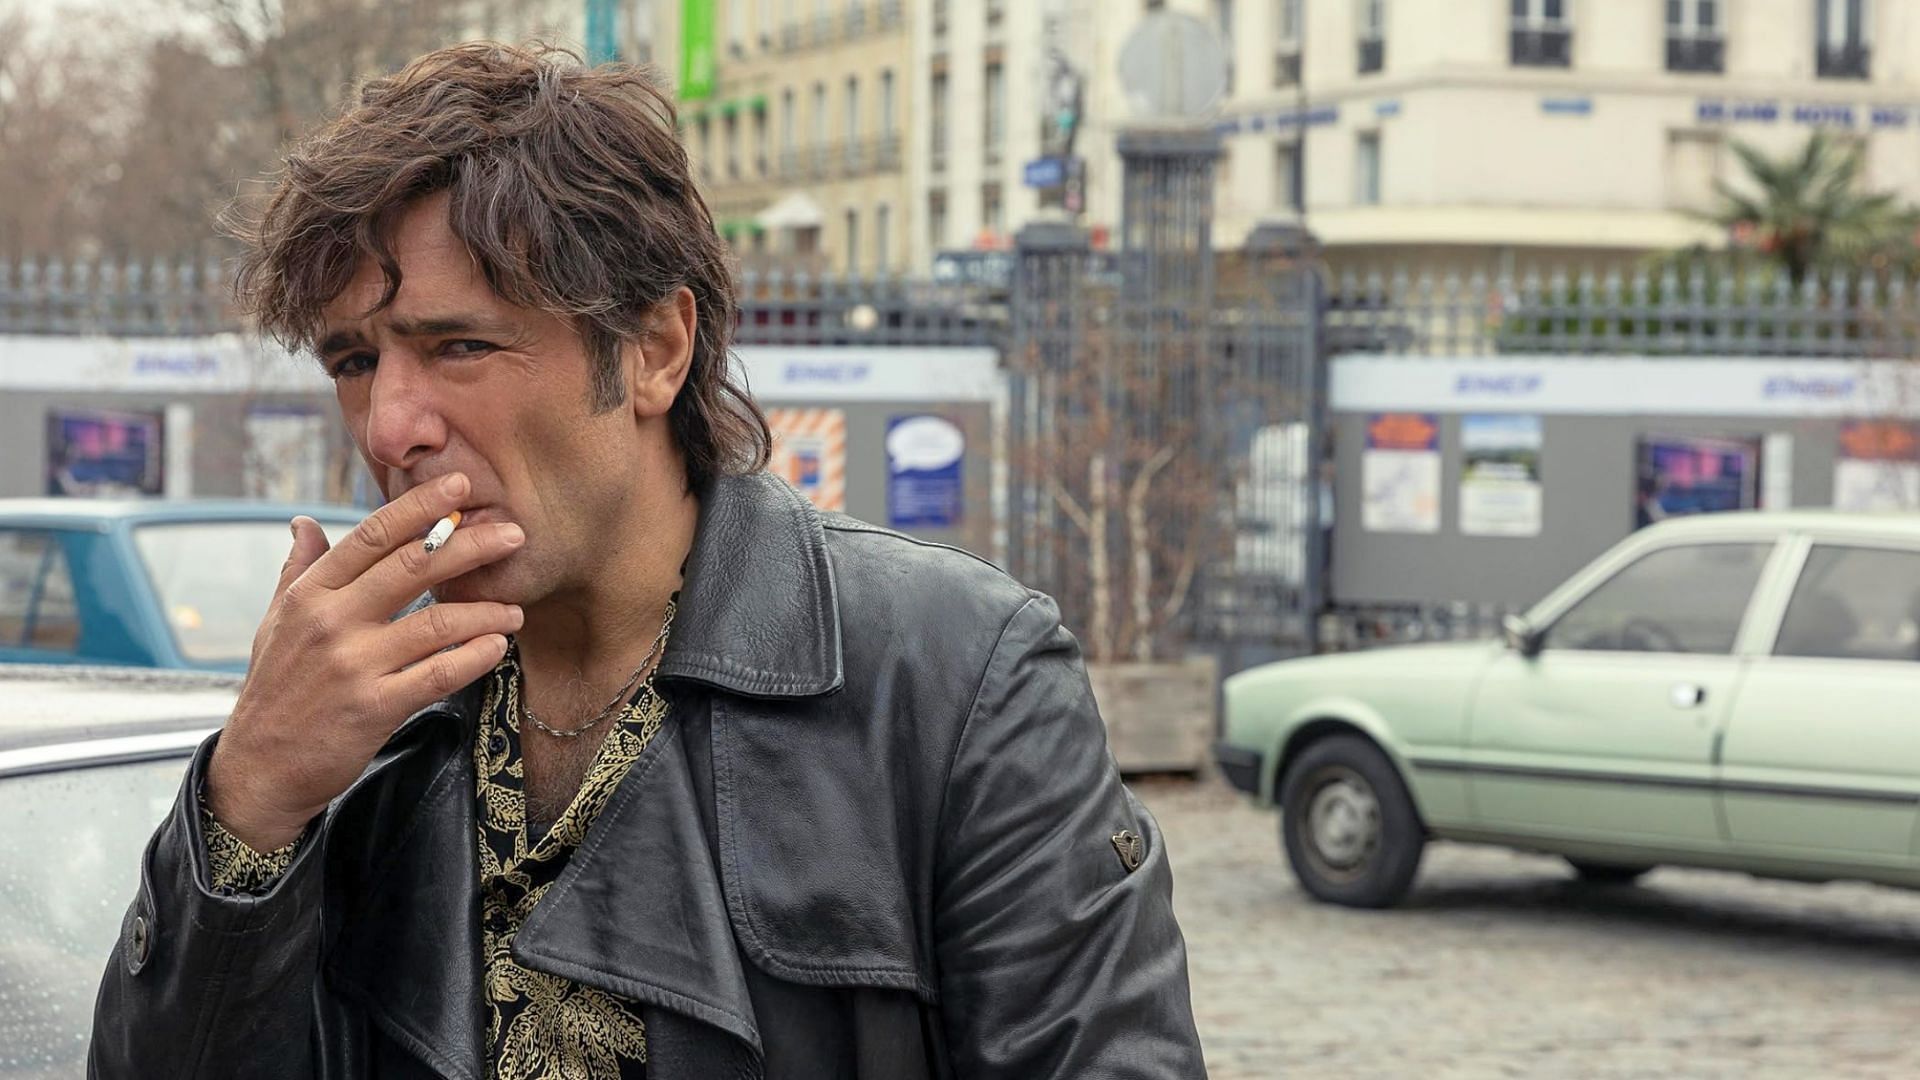 Adriano Giannini as Tommaso on the show (Image via Netflix)